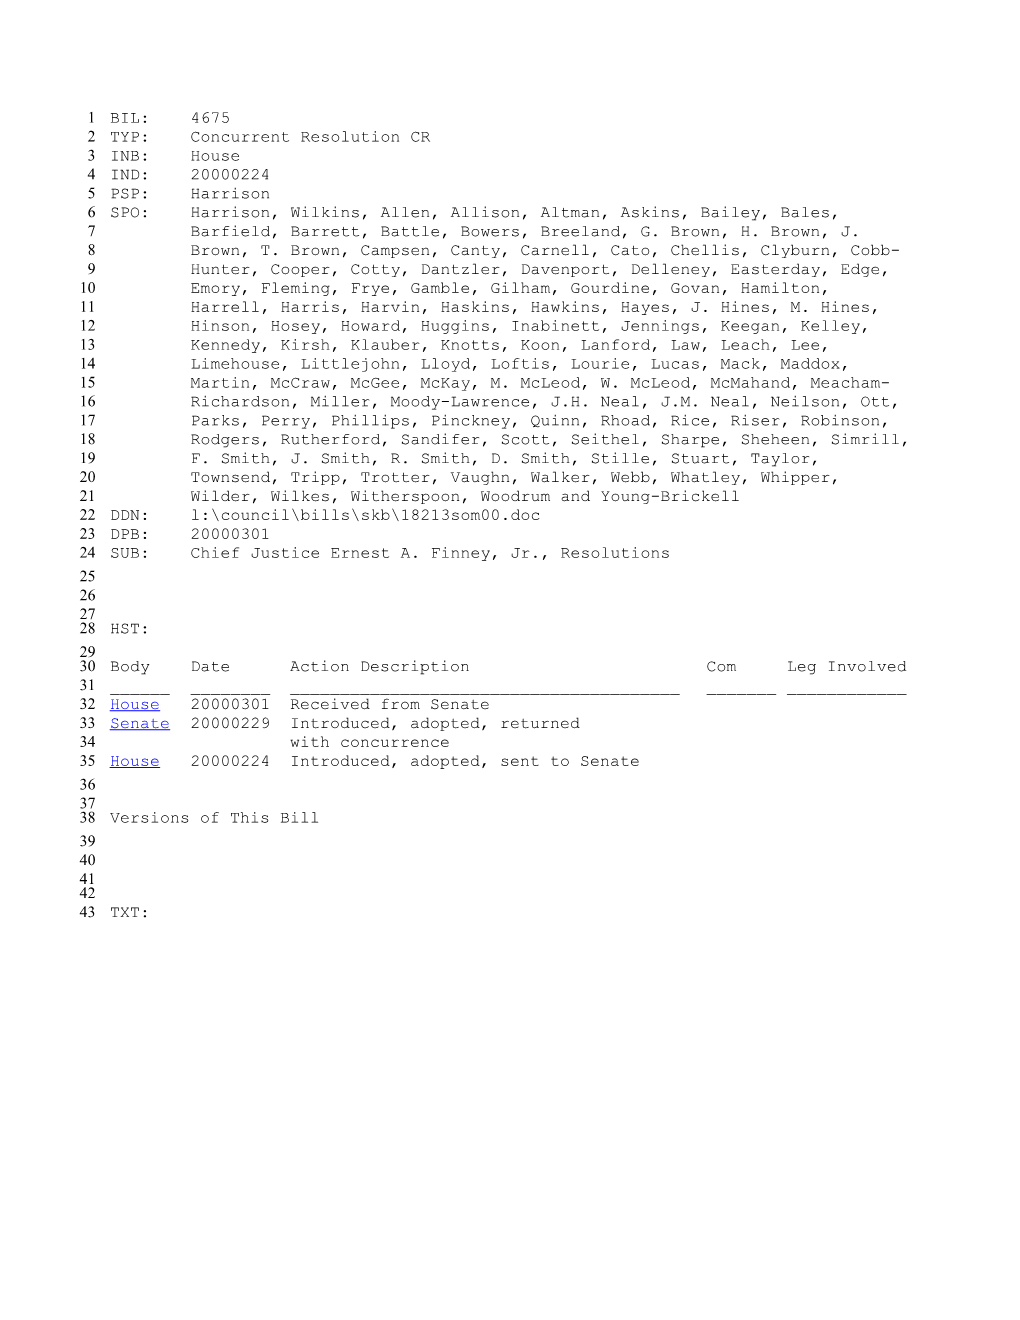 1999-2000 Bill 4675: Chief Justice Ernest A. Finney, Jr., Resolutions - South Carolina